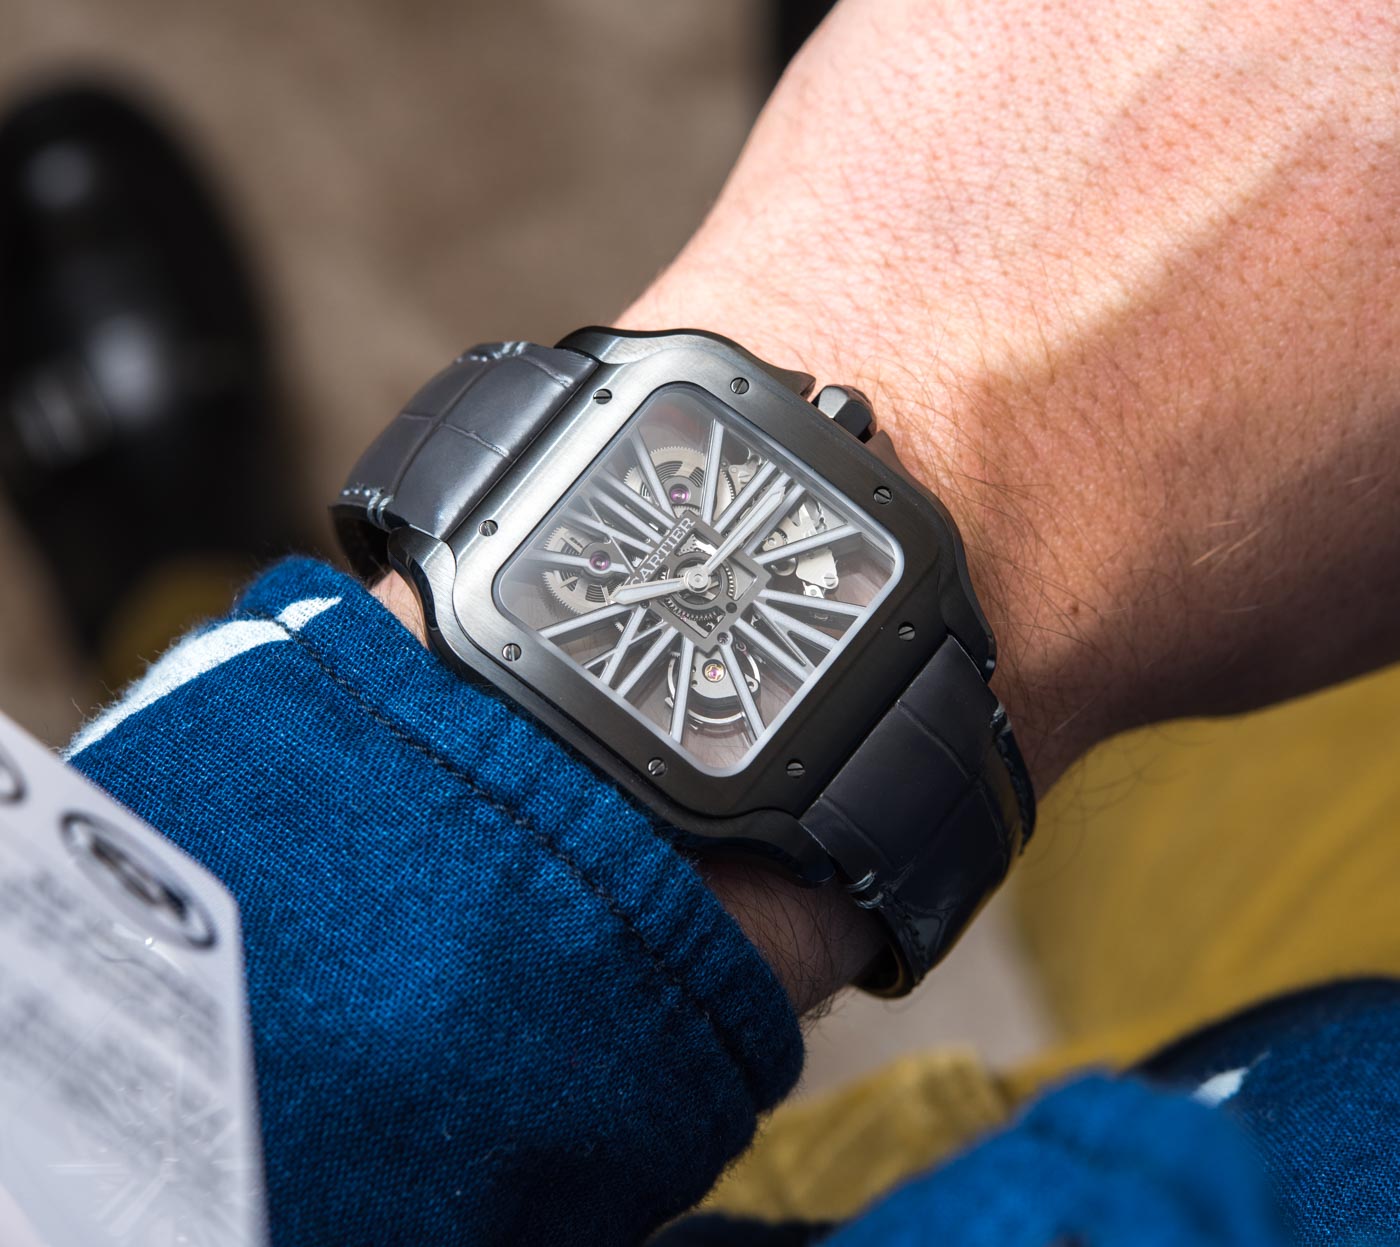 cartier santos titanium watch